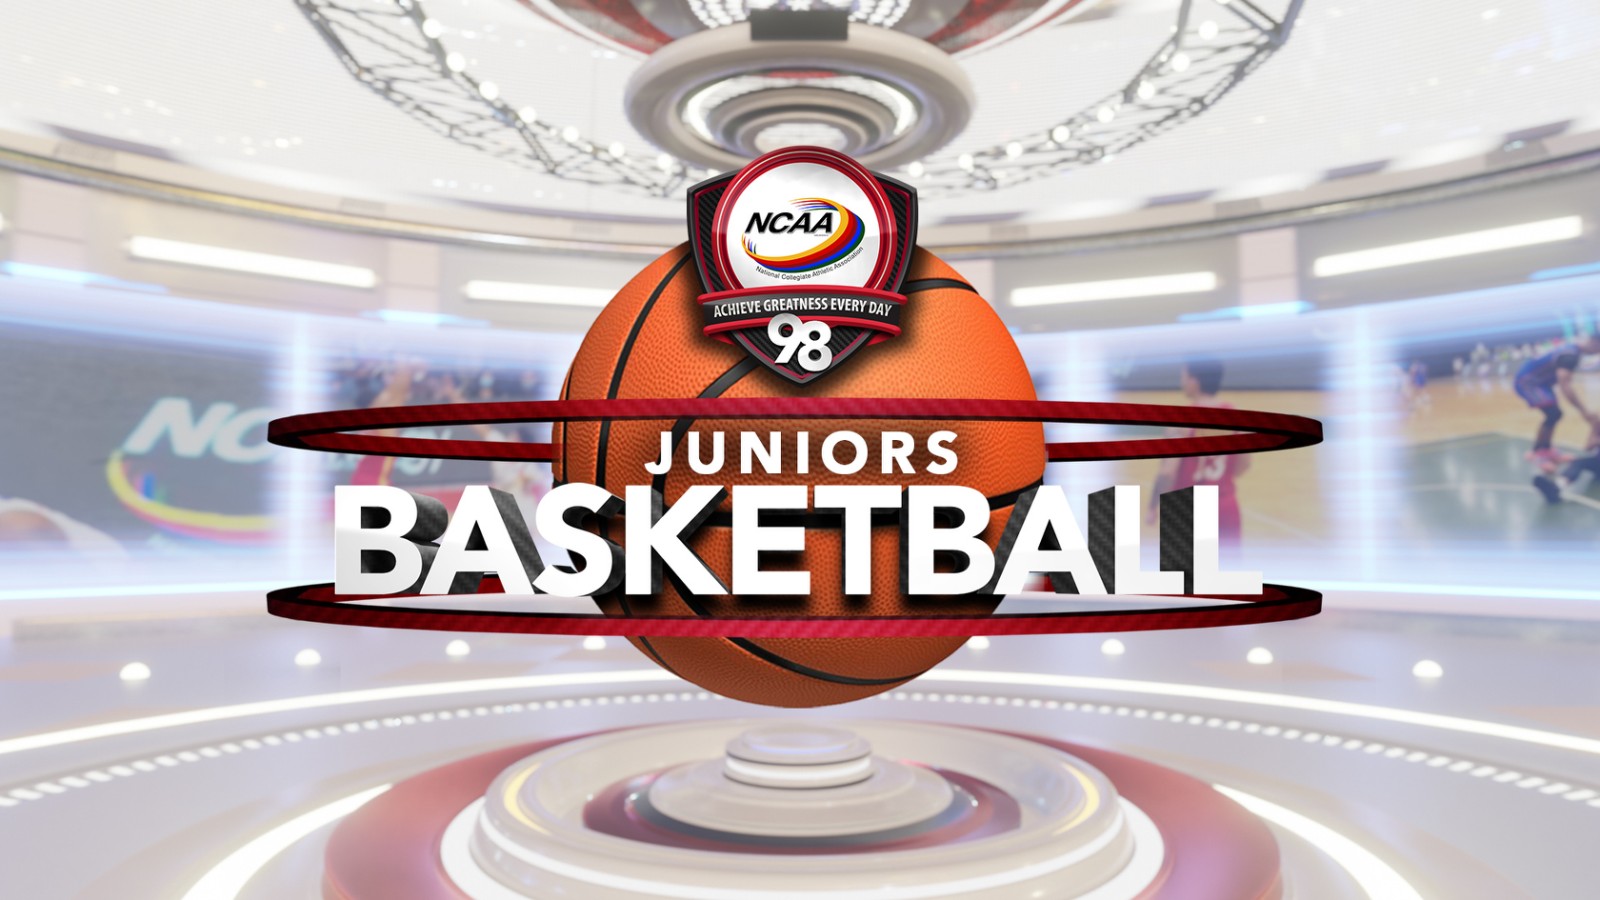 GMA Network airs much-awaited return of NCAA Season 98 Juniors Basketball this February